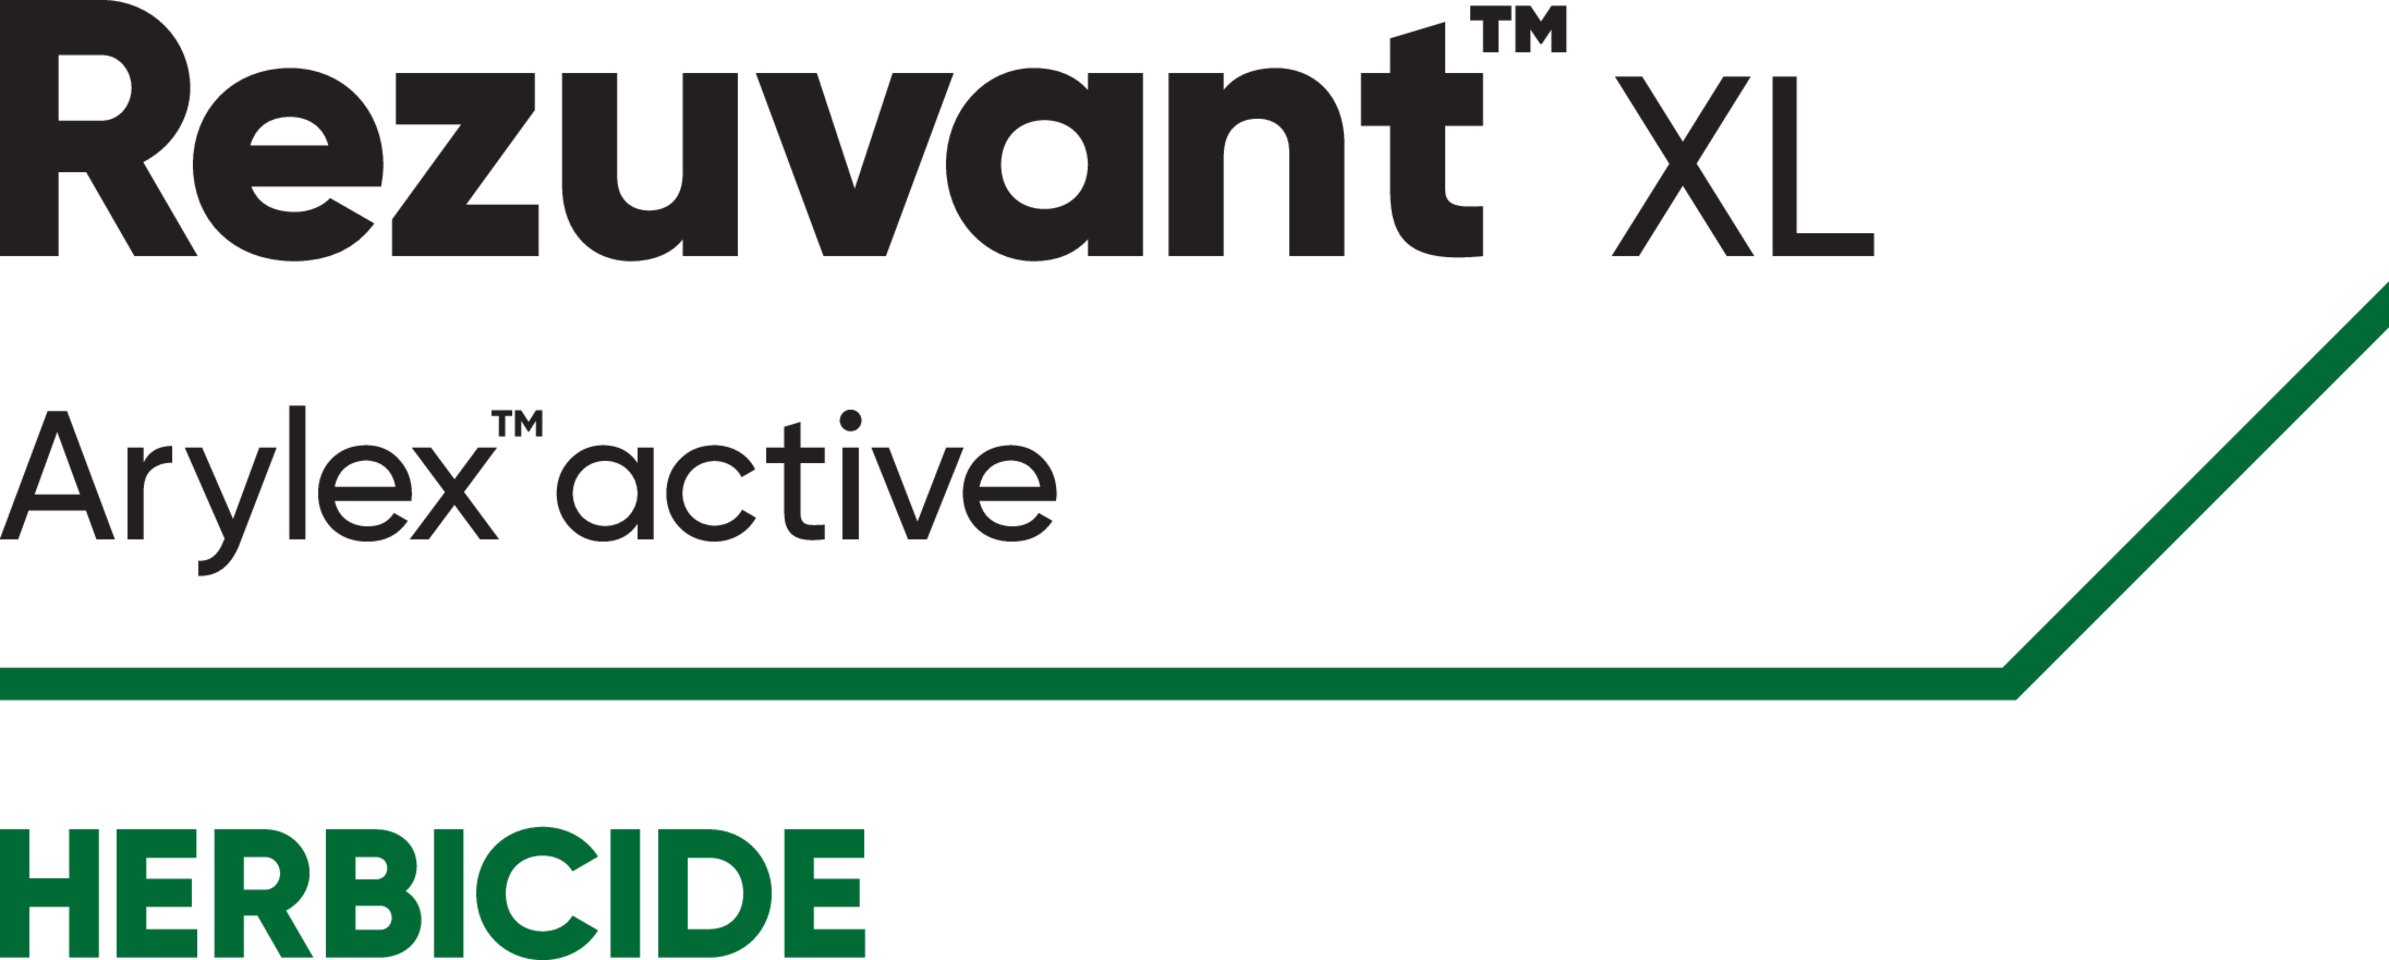 Rezuvant XL logo